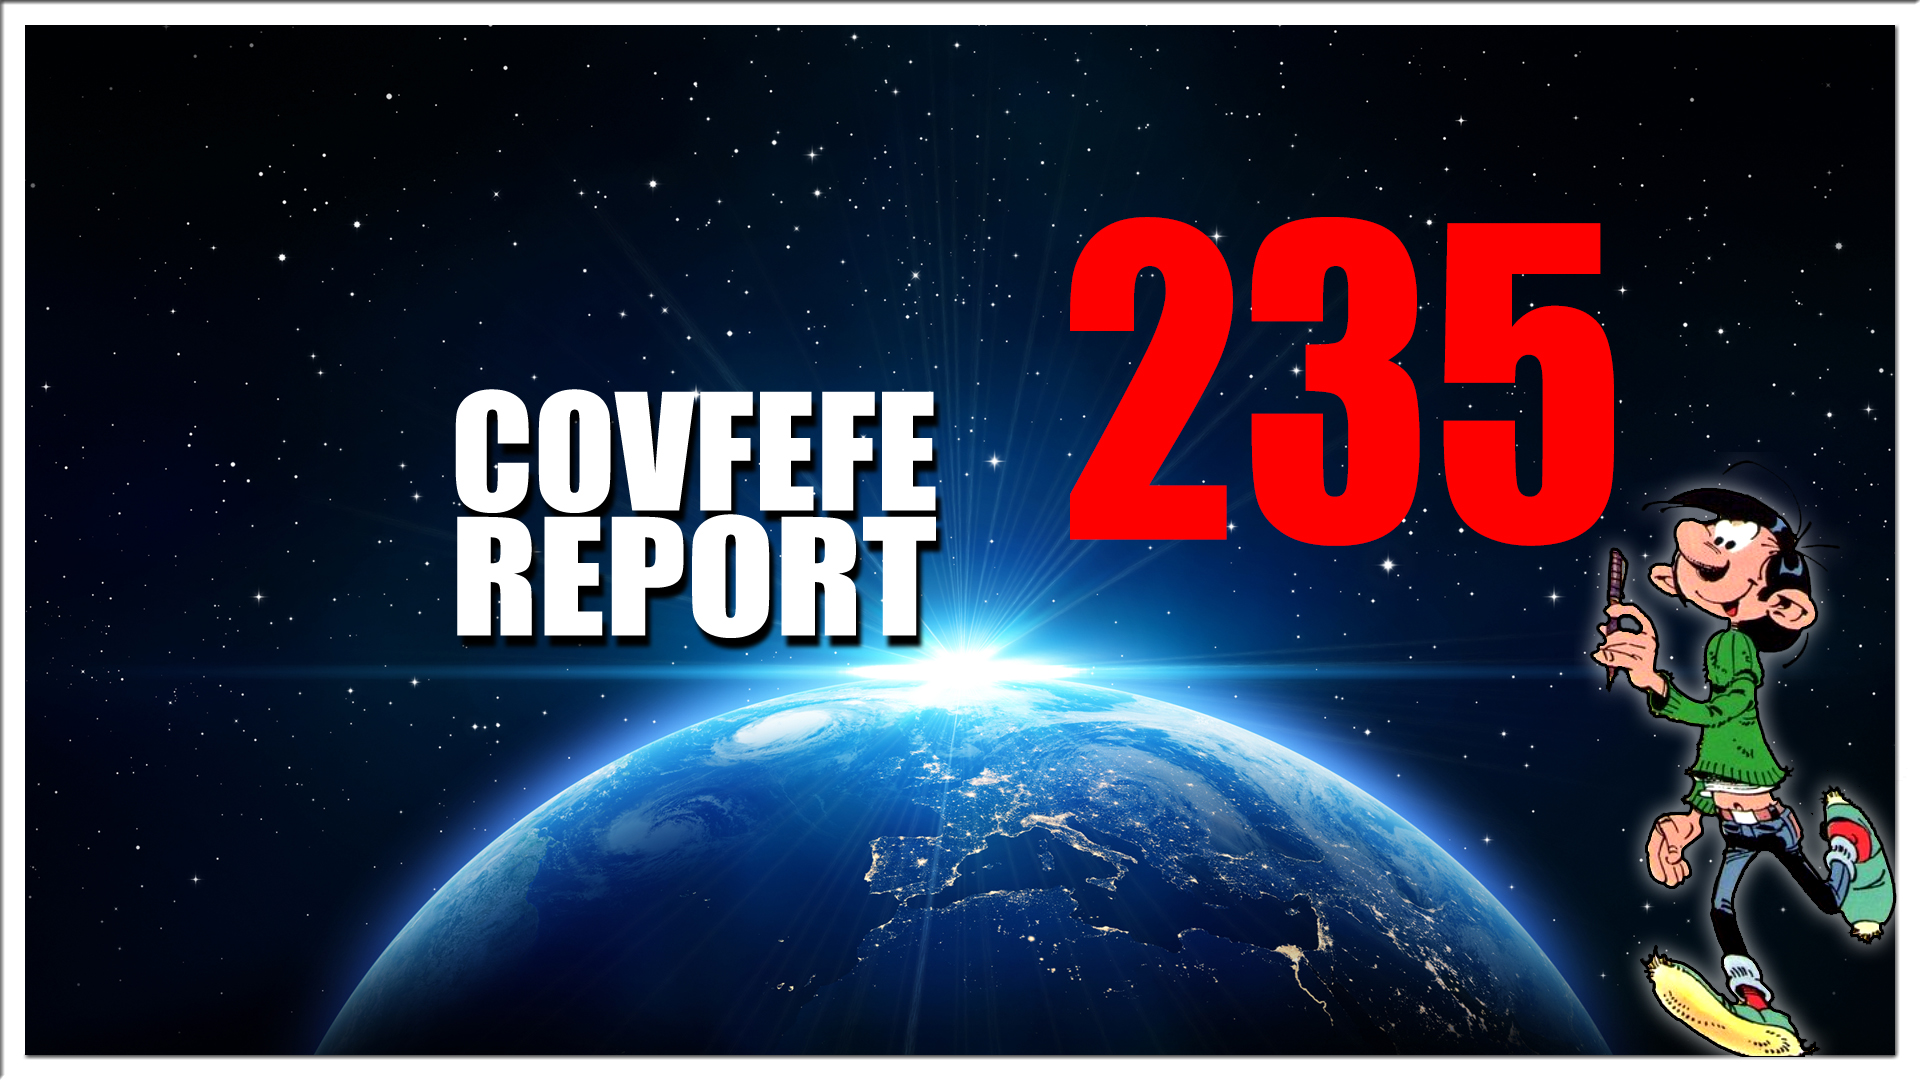 Covfefe Report 235. ngt